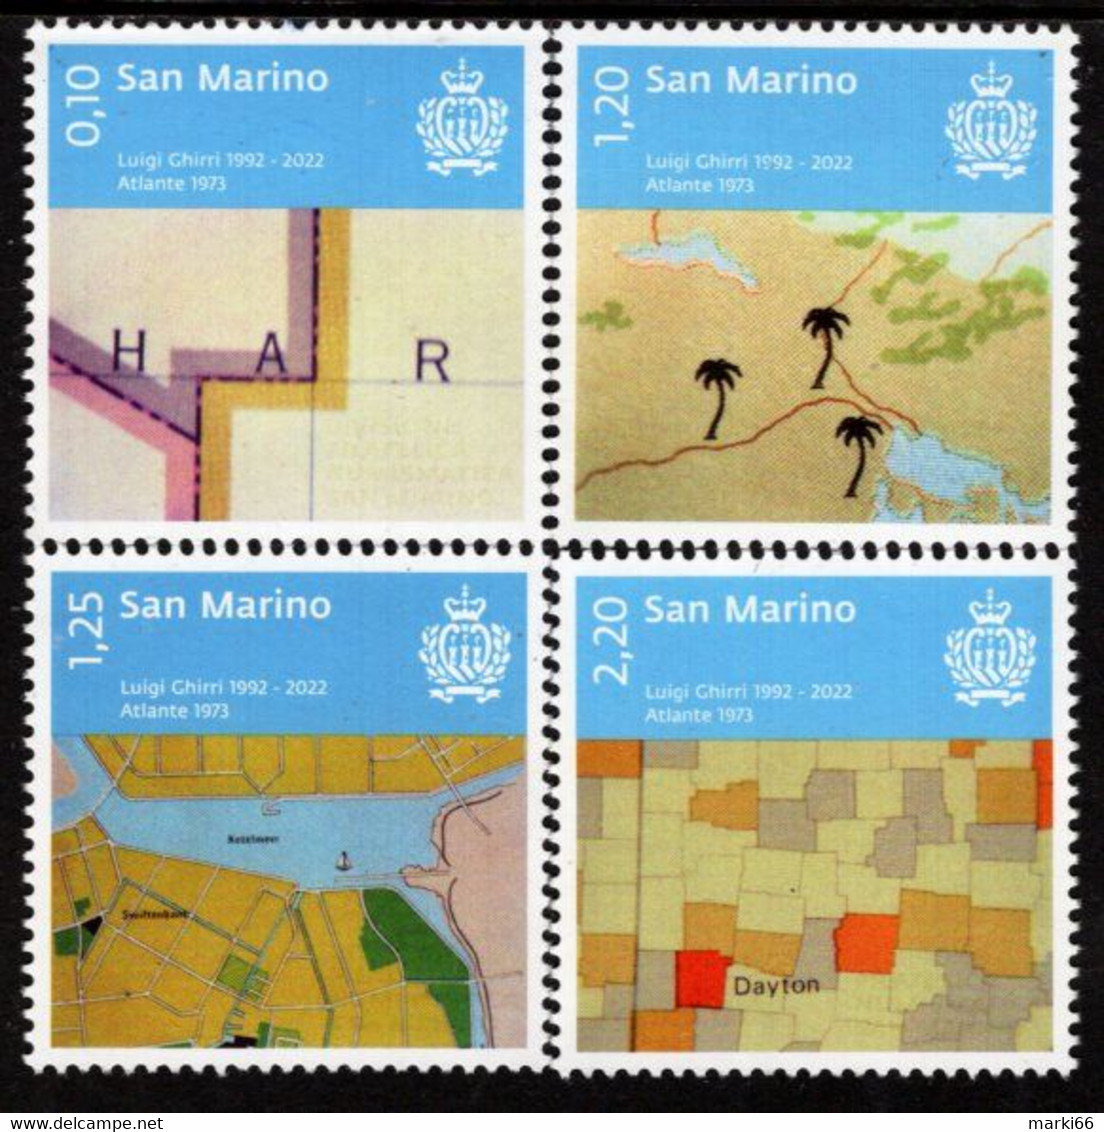 San Marino - 2022 - 30th Anniversary Of Death Of Luigi Ghirri, Master Of Modern Photography - Mint Stamp Set - Unused Stamps